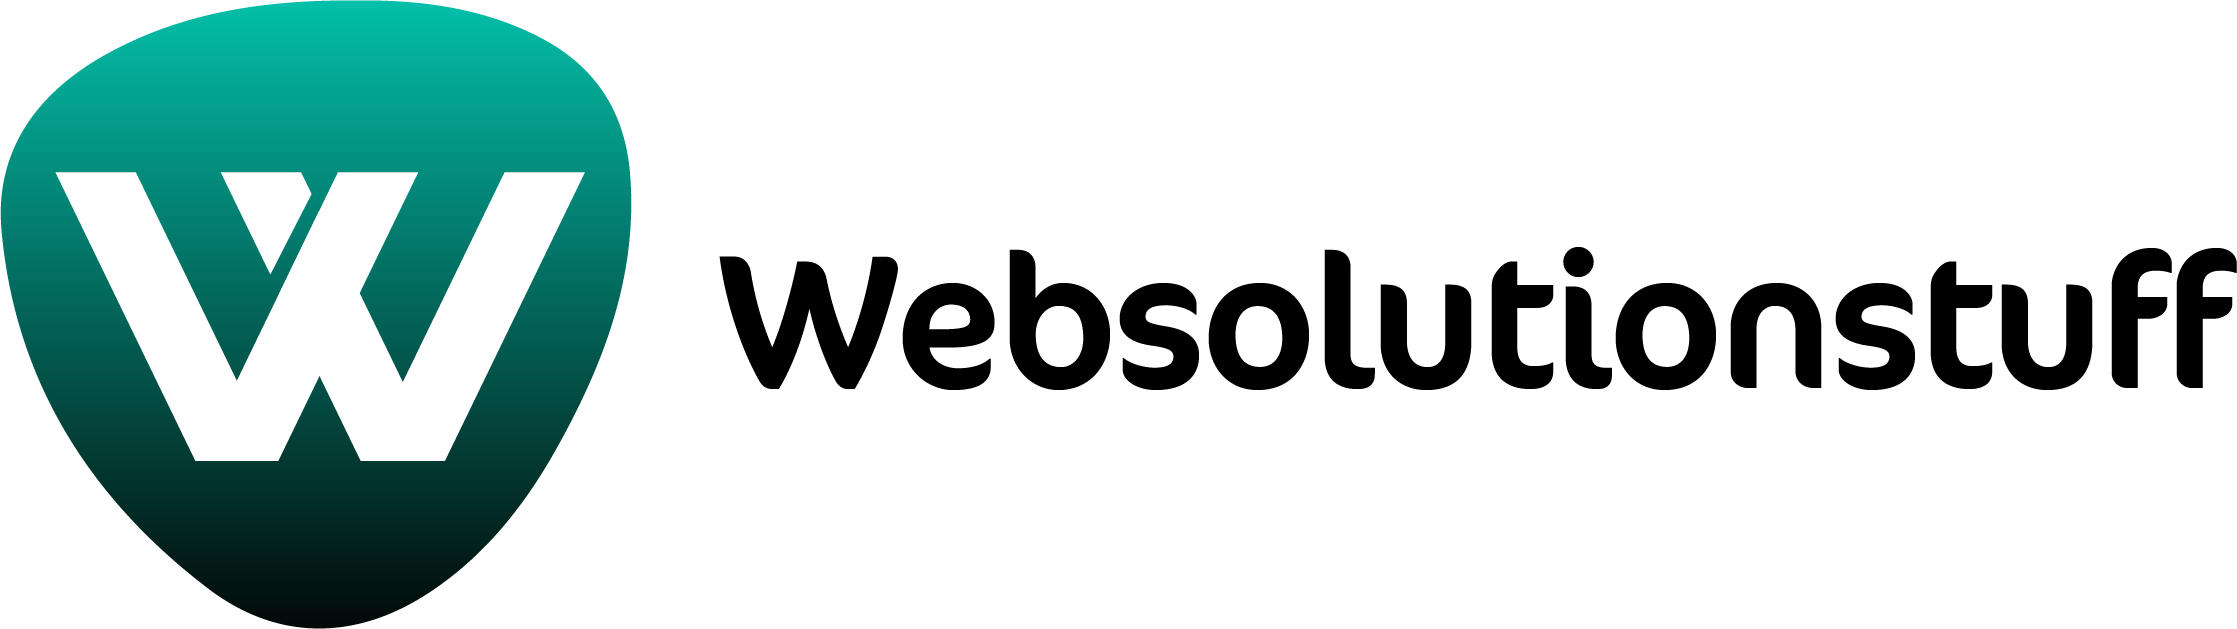 websolutionstuff logo